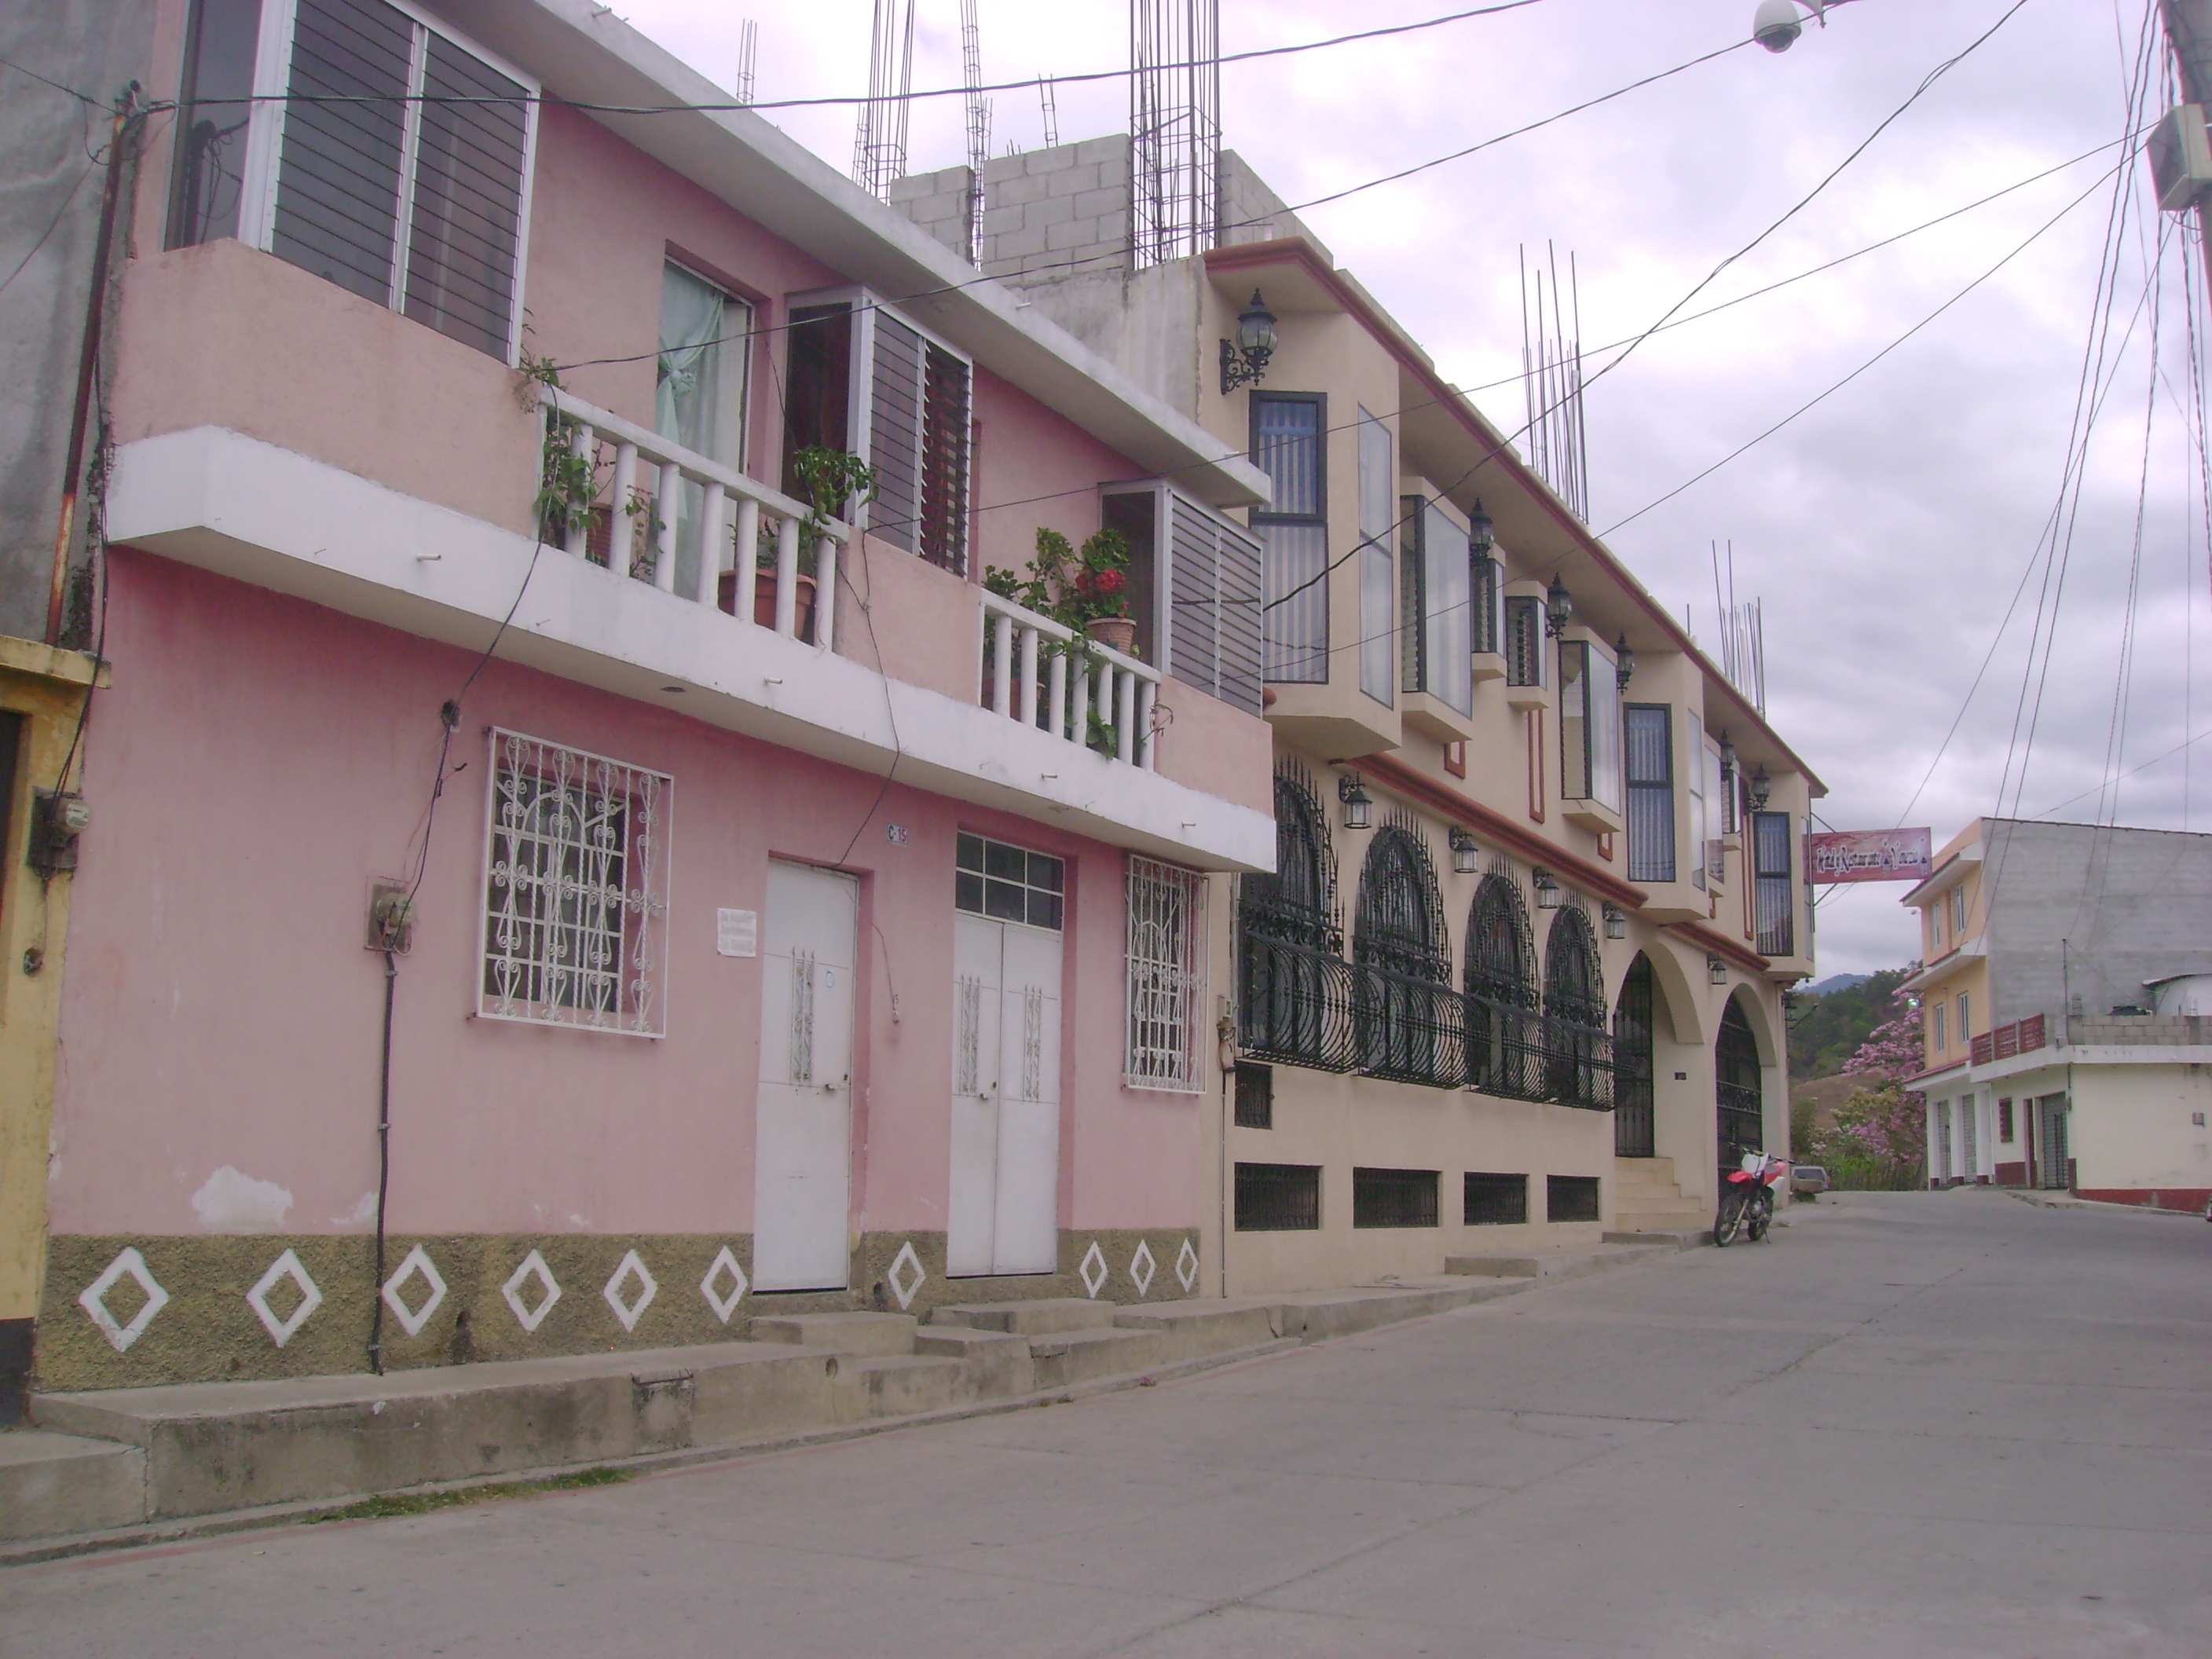 Pachalum, Quiché: A Rural Municipality Struggles with Decreasing School Attendance Due to Migration